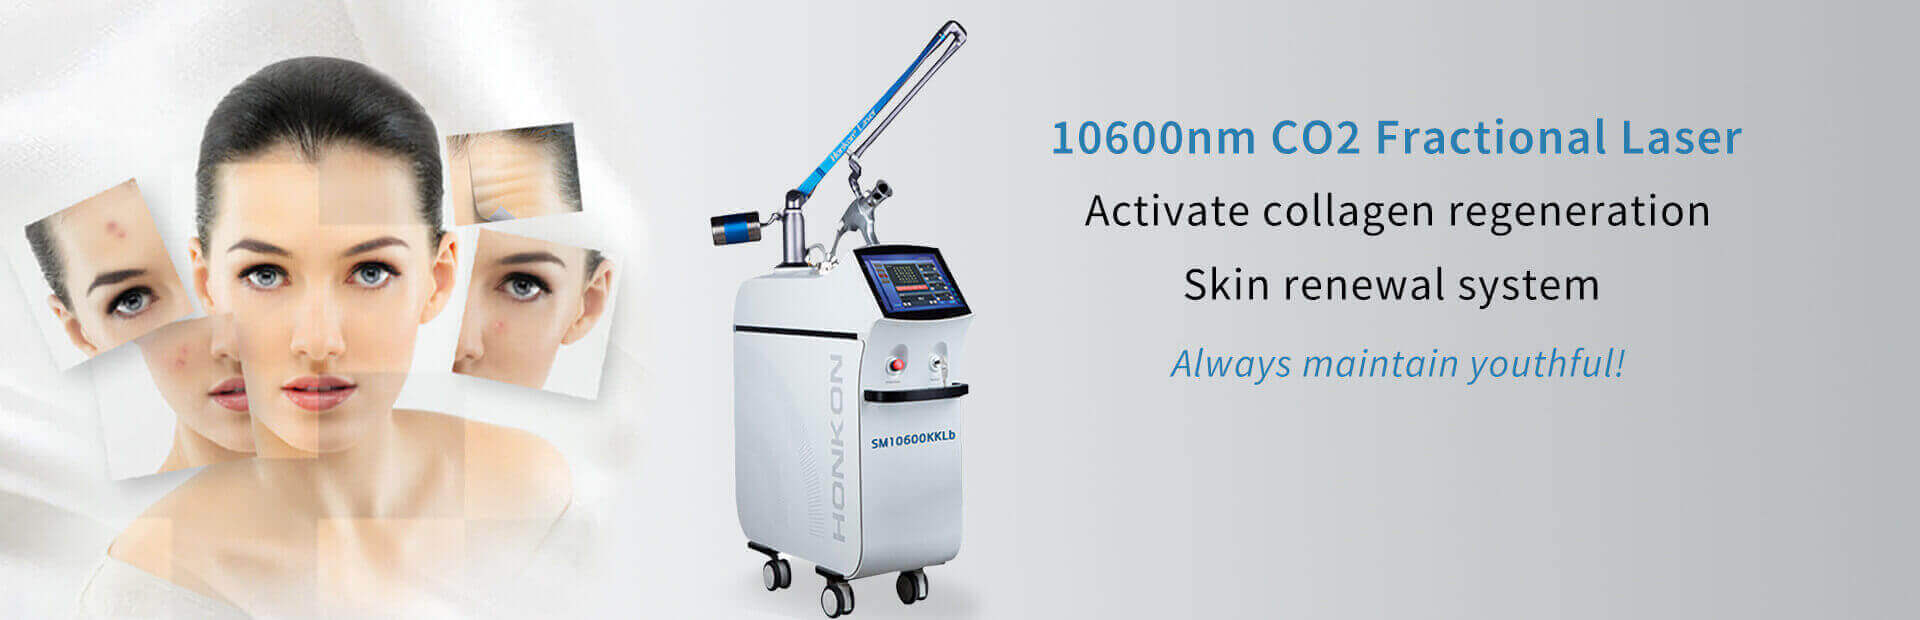 SM10600KKlb Vaginal tightening 10600nm CO2 Fractional laser stretch mark/scar removal  anti-wrinkle skin resurfacing machine